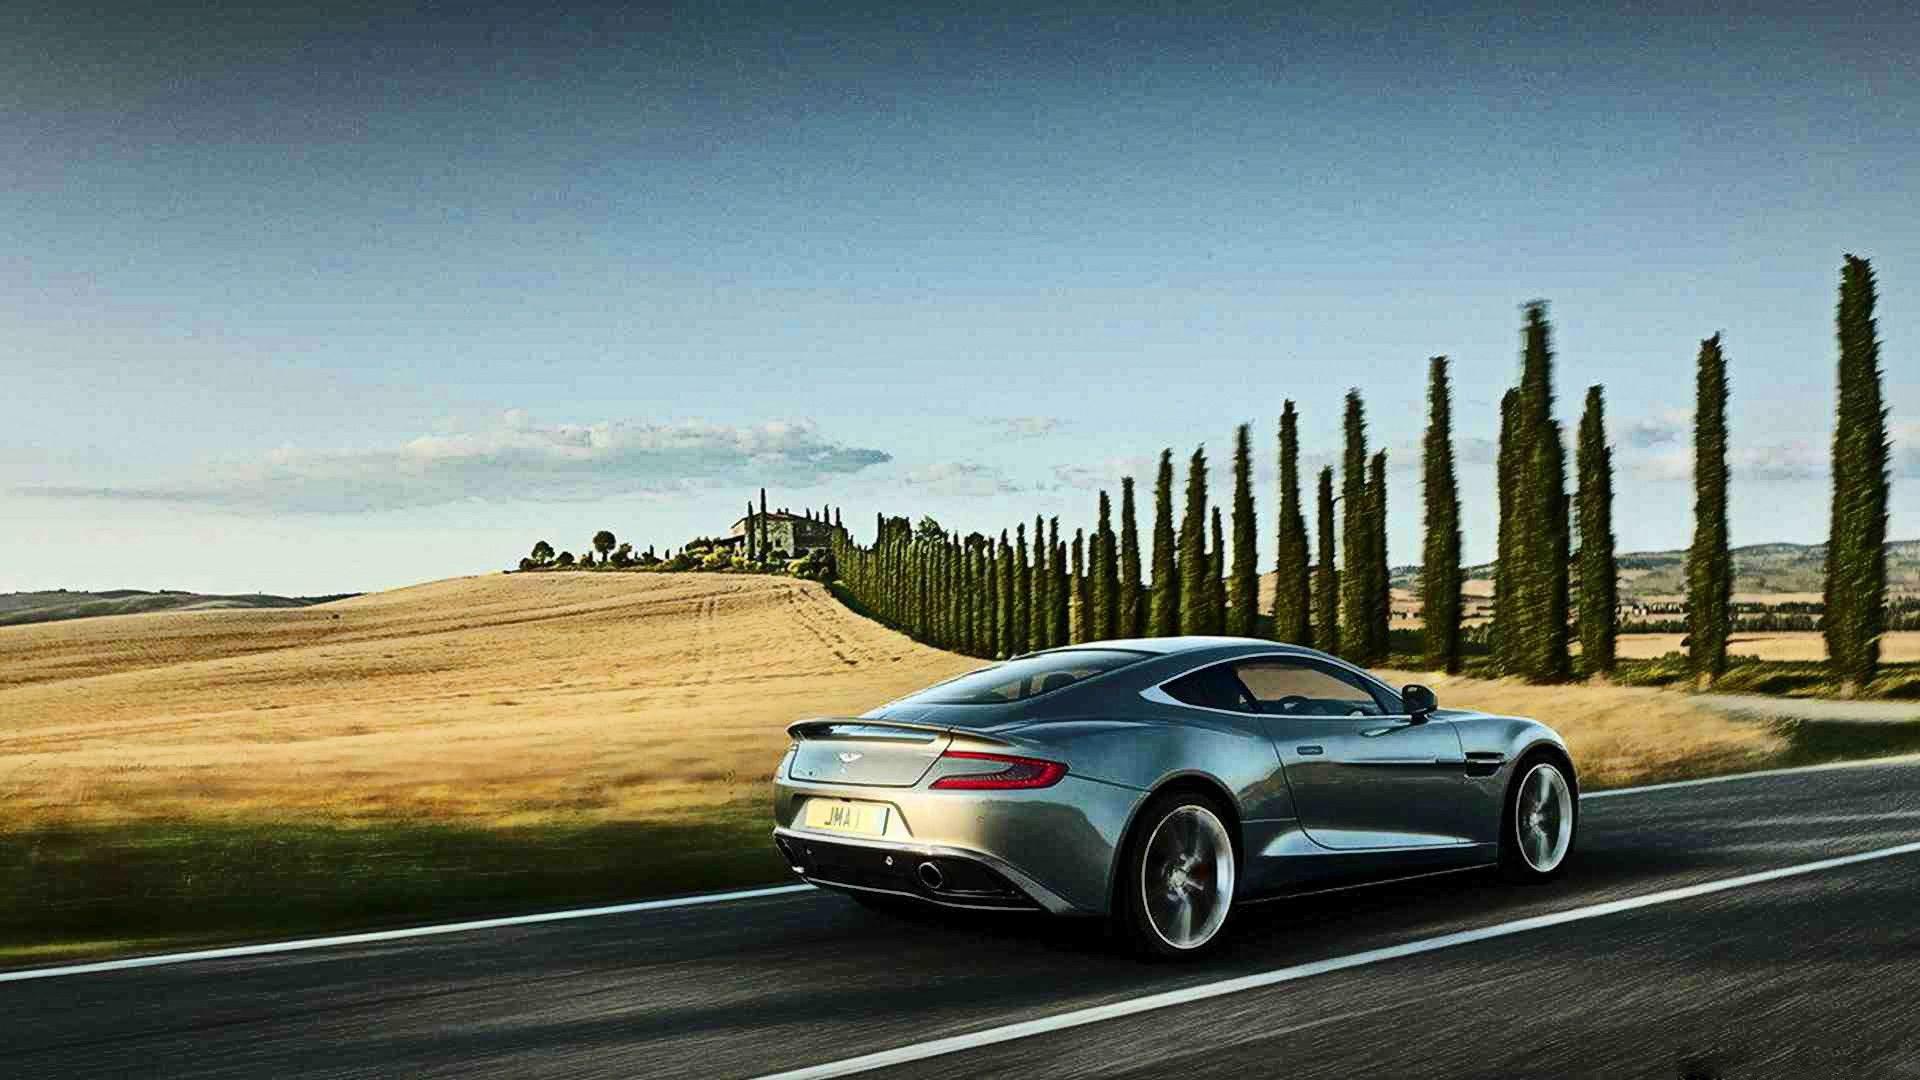 Free Aston Martin Vanquish Wallpaper High Quality Resolution at